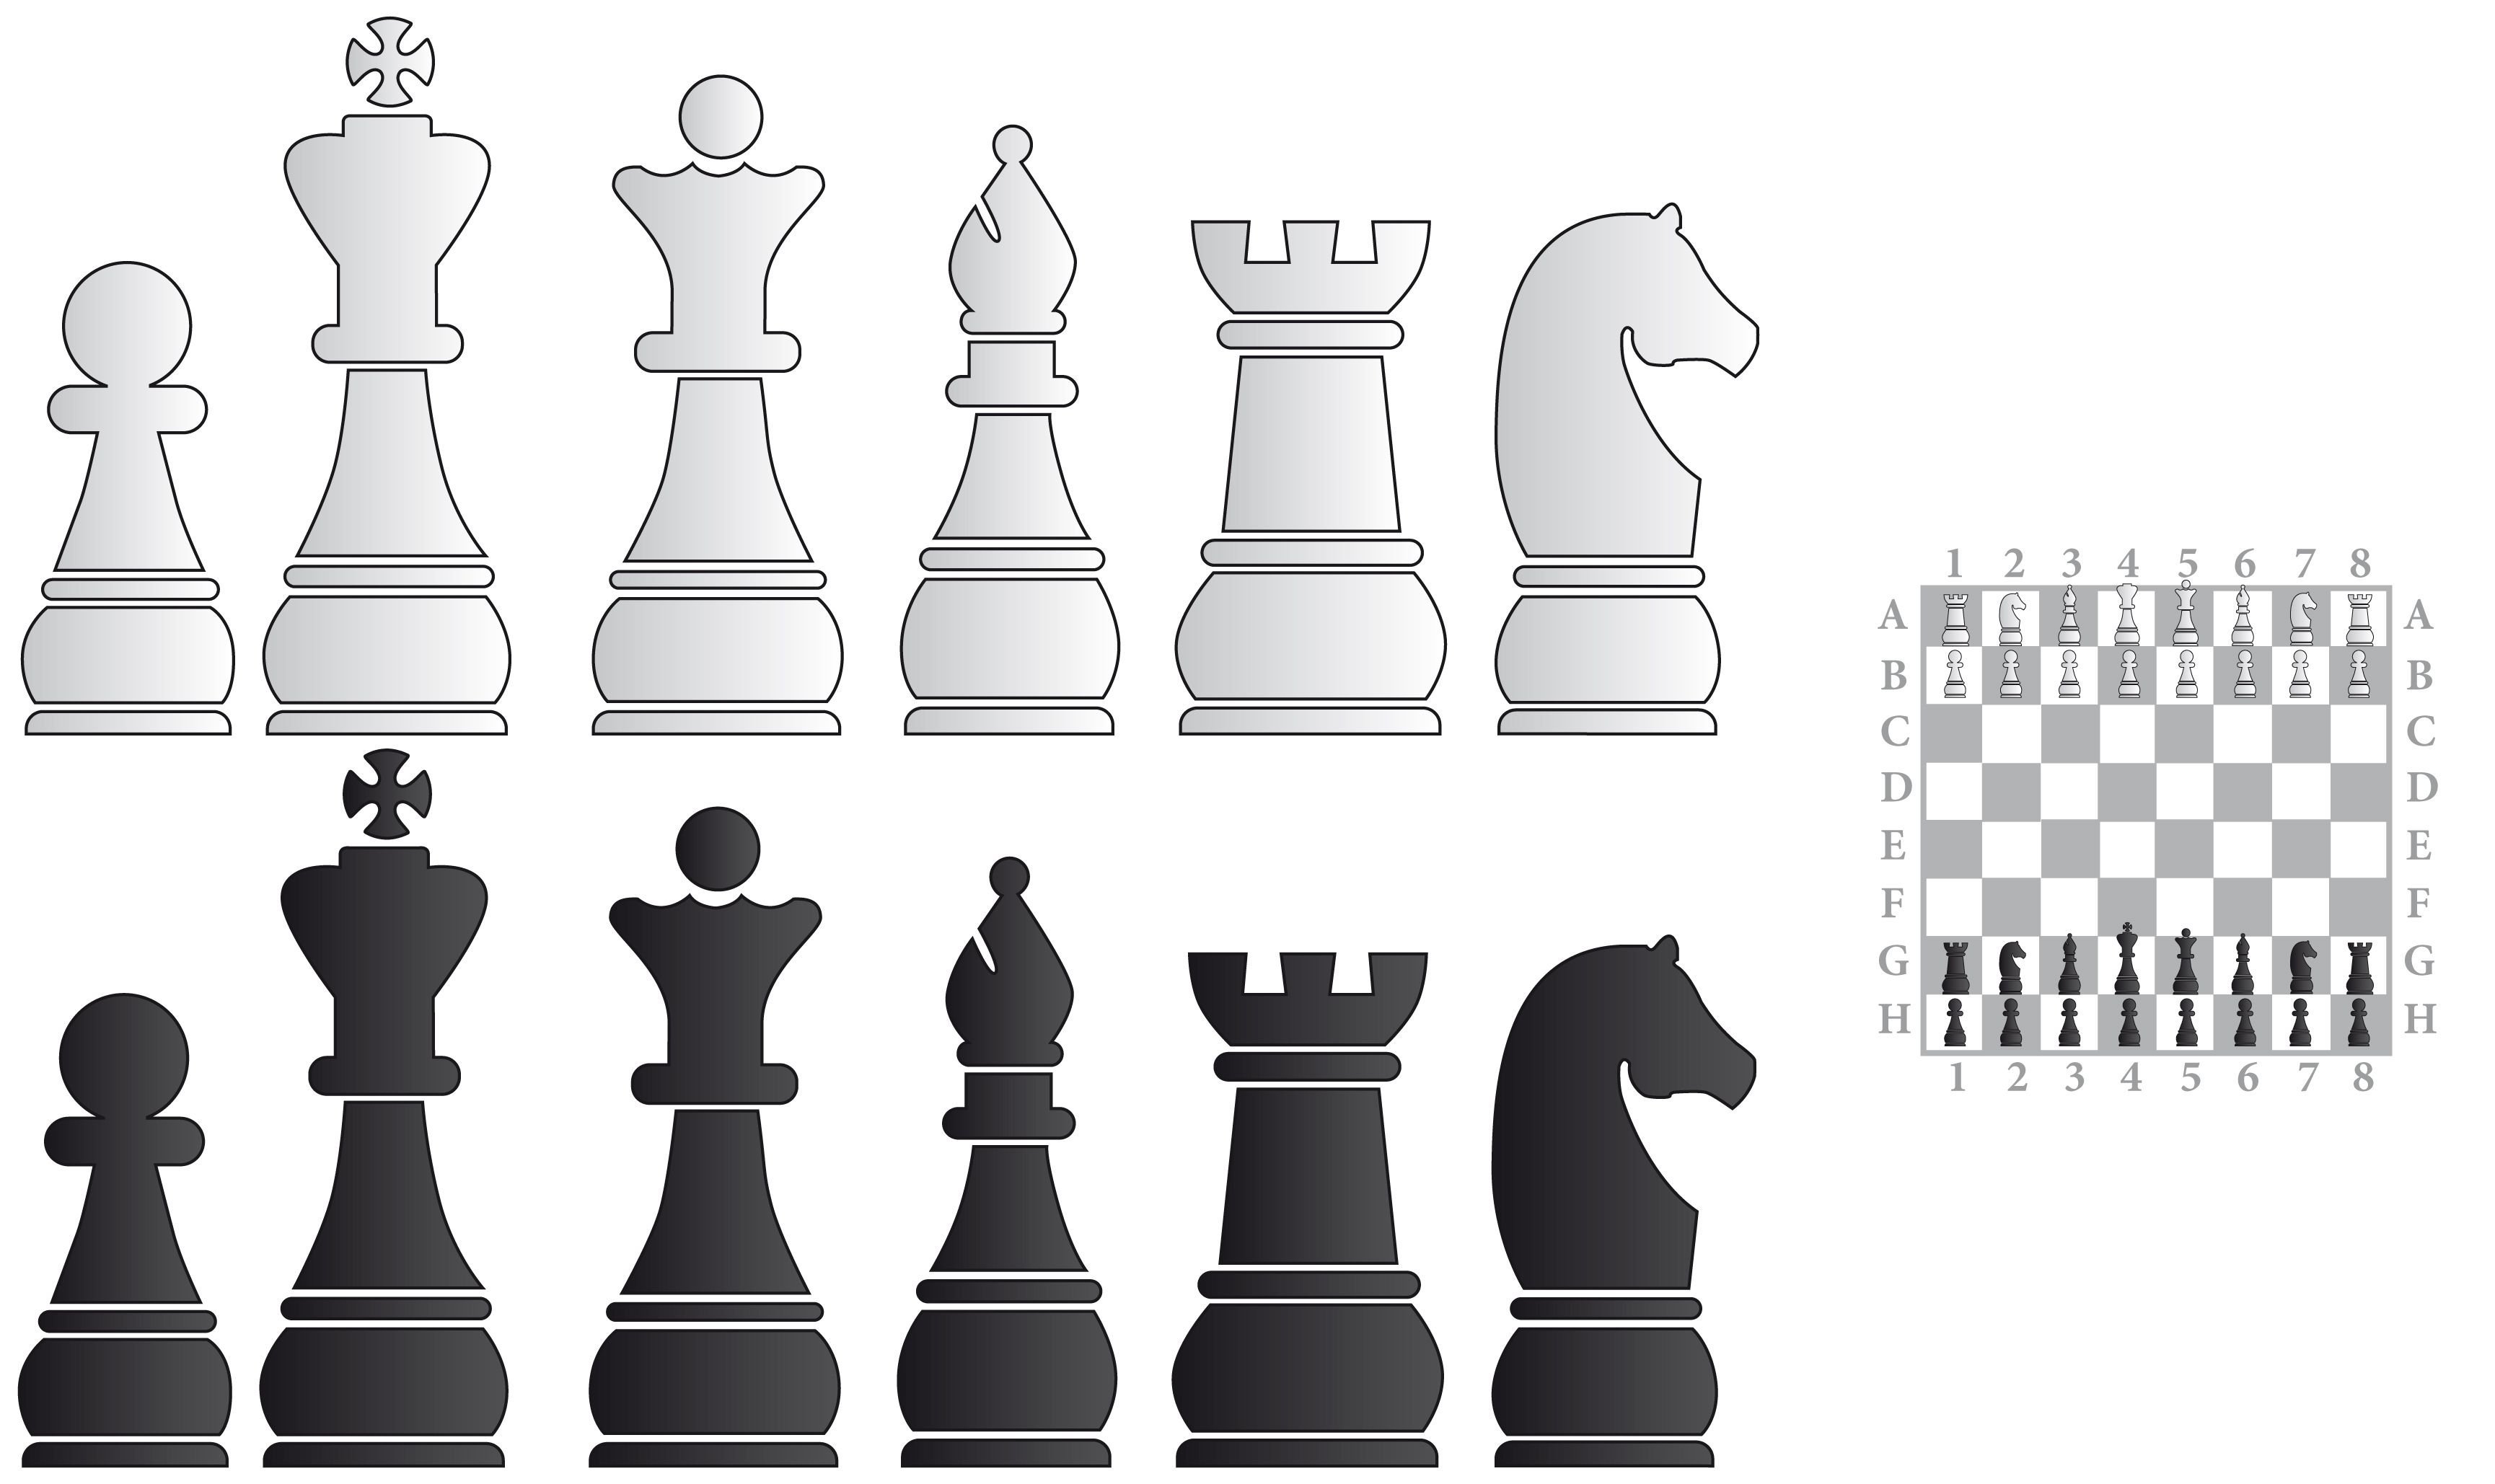 Король пешка пешка ладья. Шахматы фигуры сбоку. Шахматы конь ферзь Ладья. Ферзь шахматы сбоку. Шахматная фигура ферзь вектор.